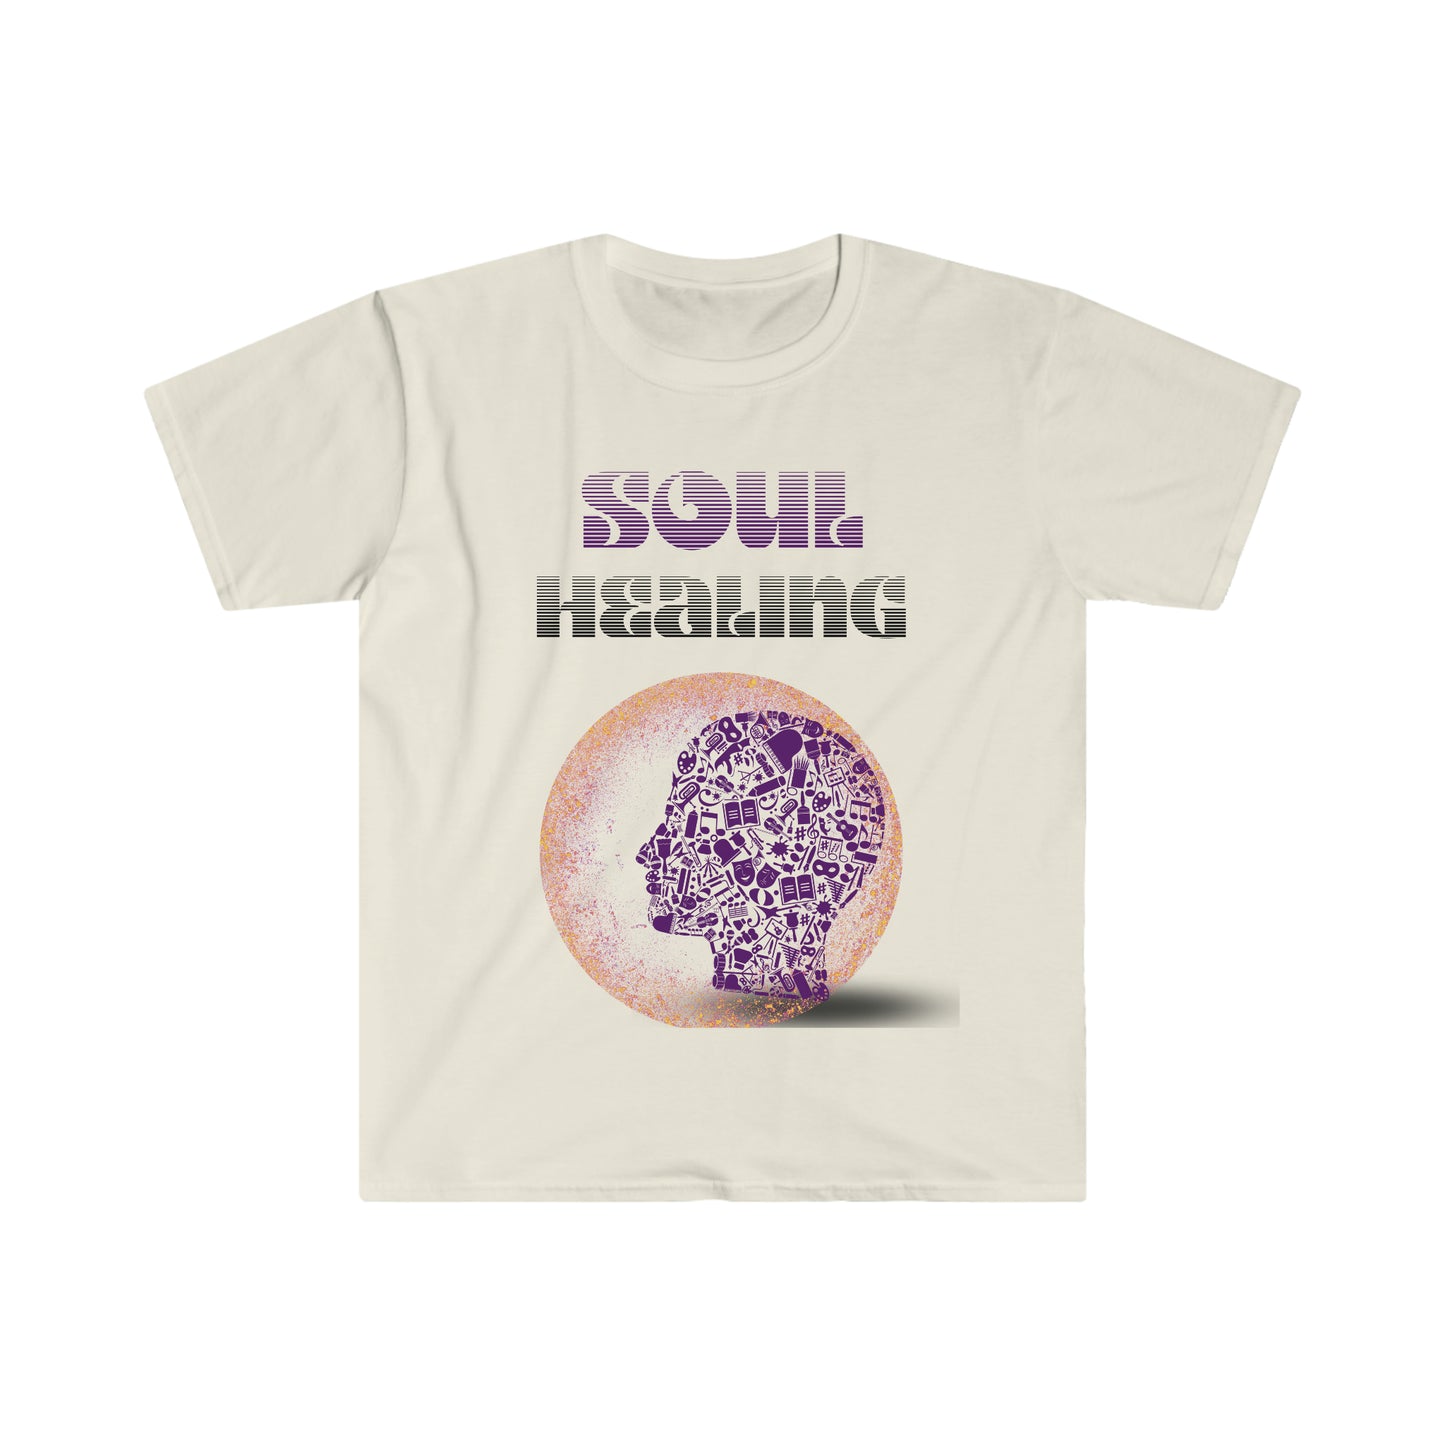 Soul Healing! Inspirational tee. 100% soft cotton